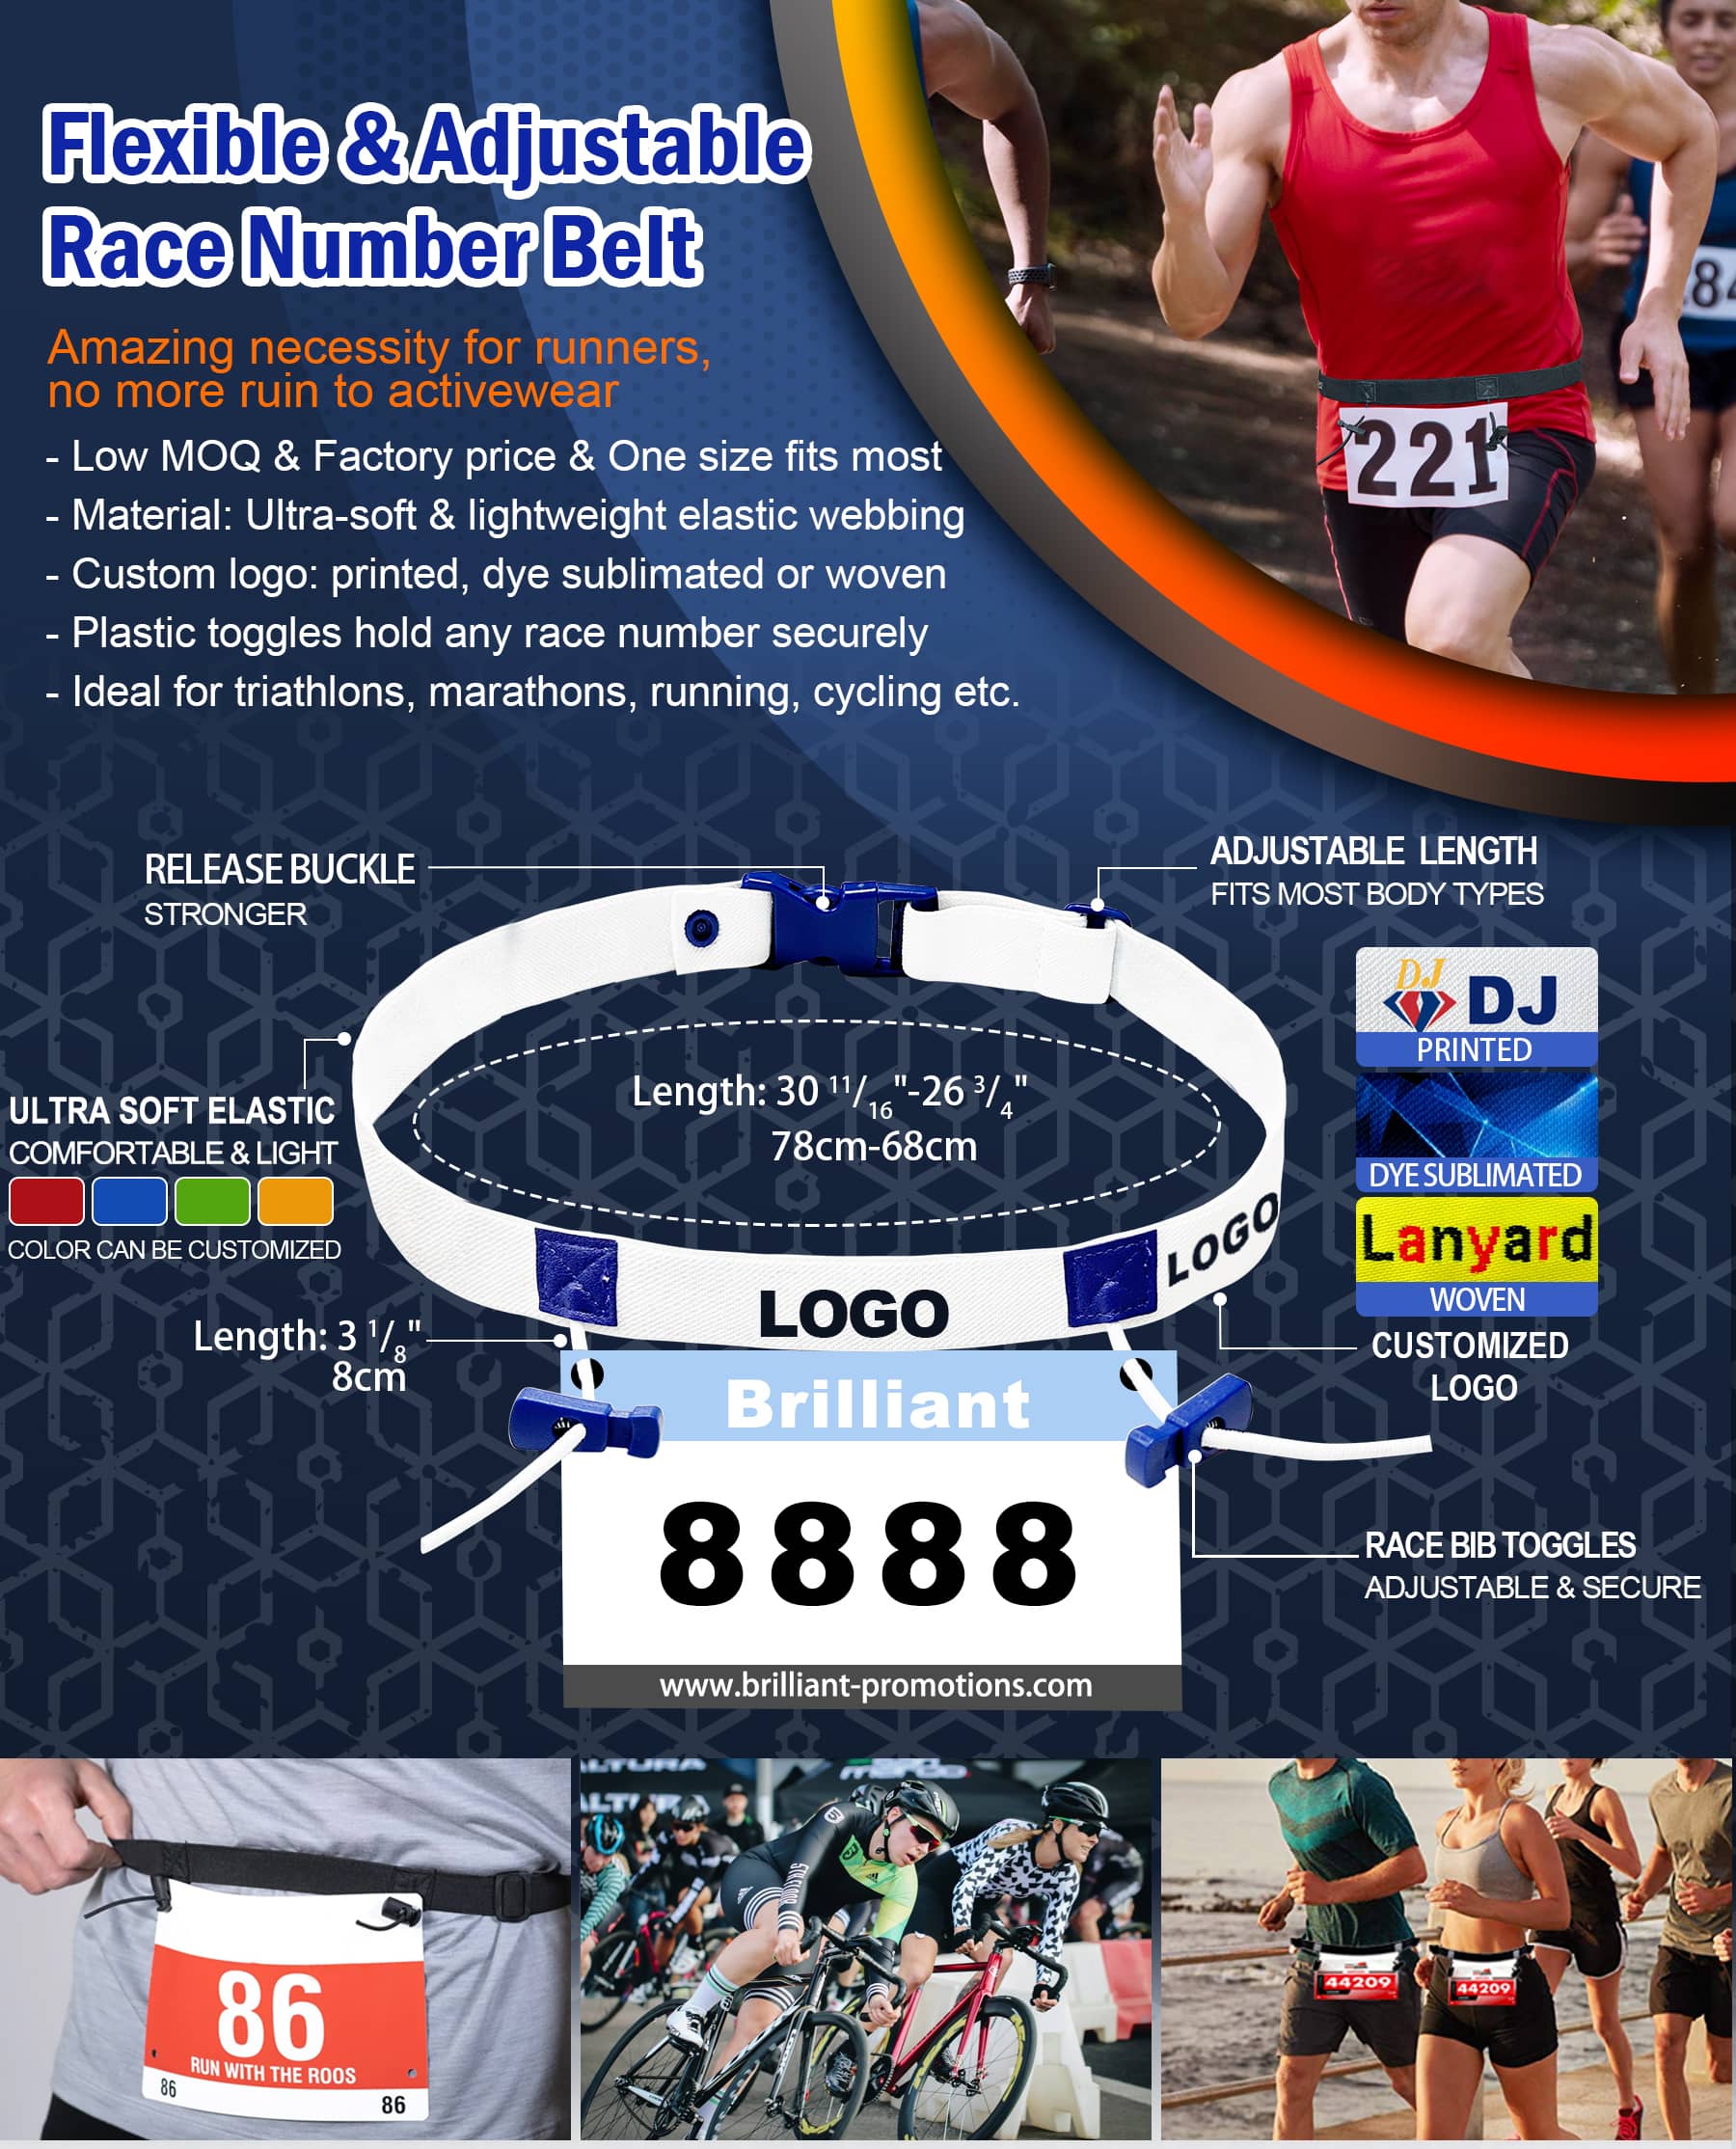 Flexible & Adjustable Race Number Belt